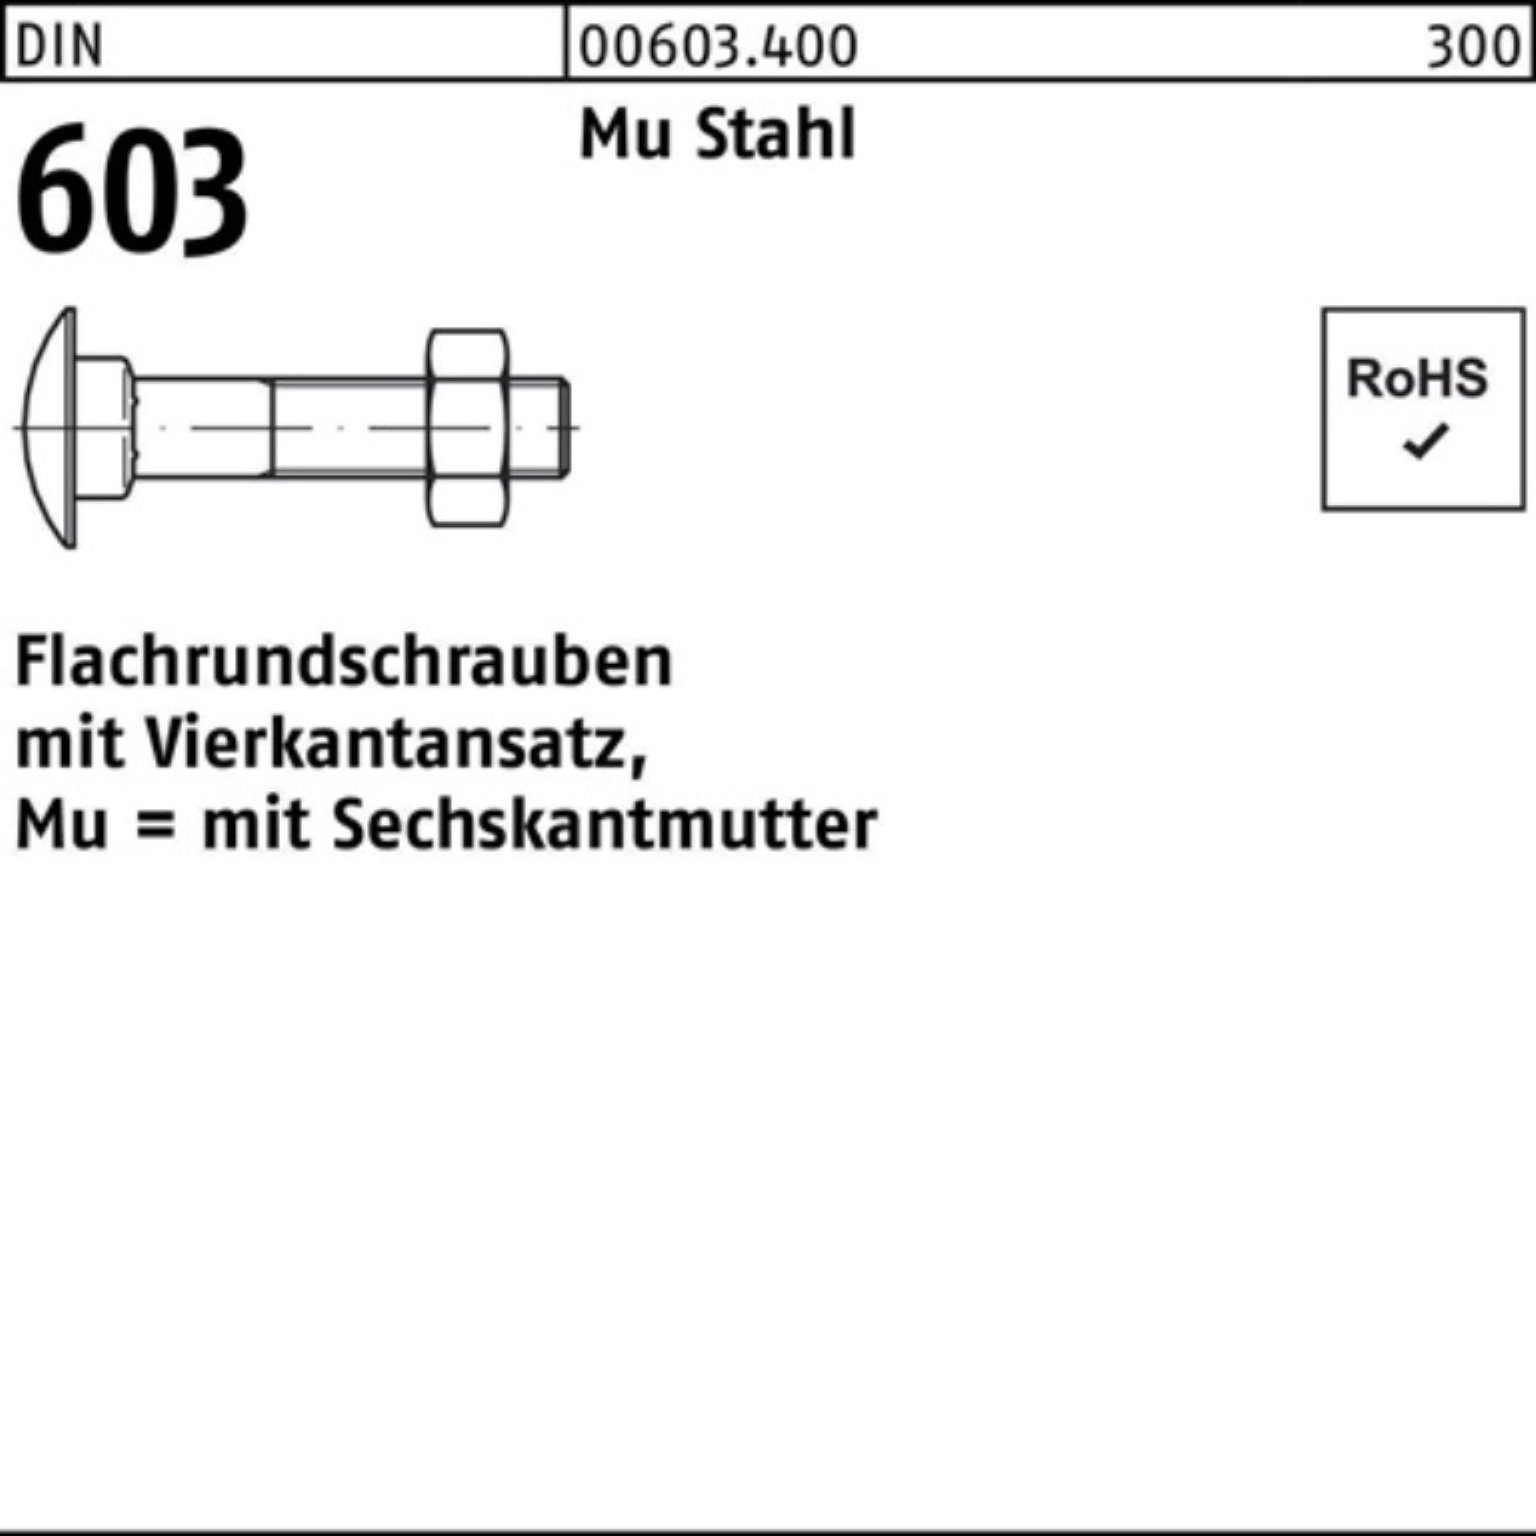 M10x100 Vierkantansatz/6-ktmutter Flachrundschraube Schraube 100er 603 DIN Reyher Pack